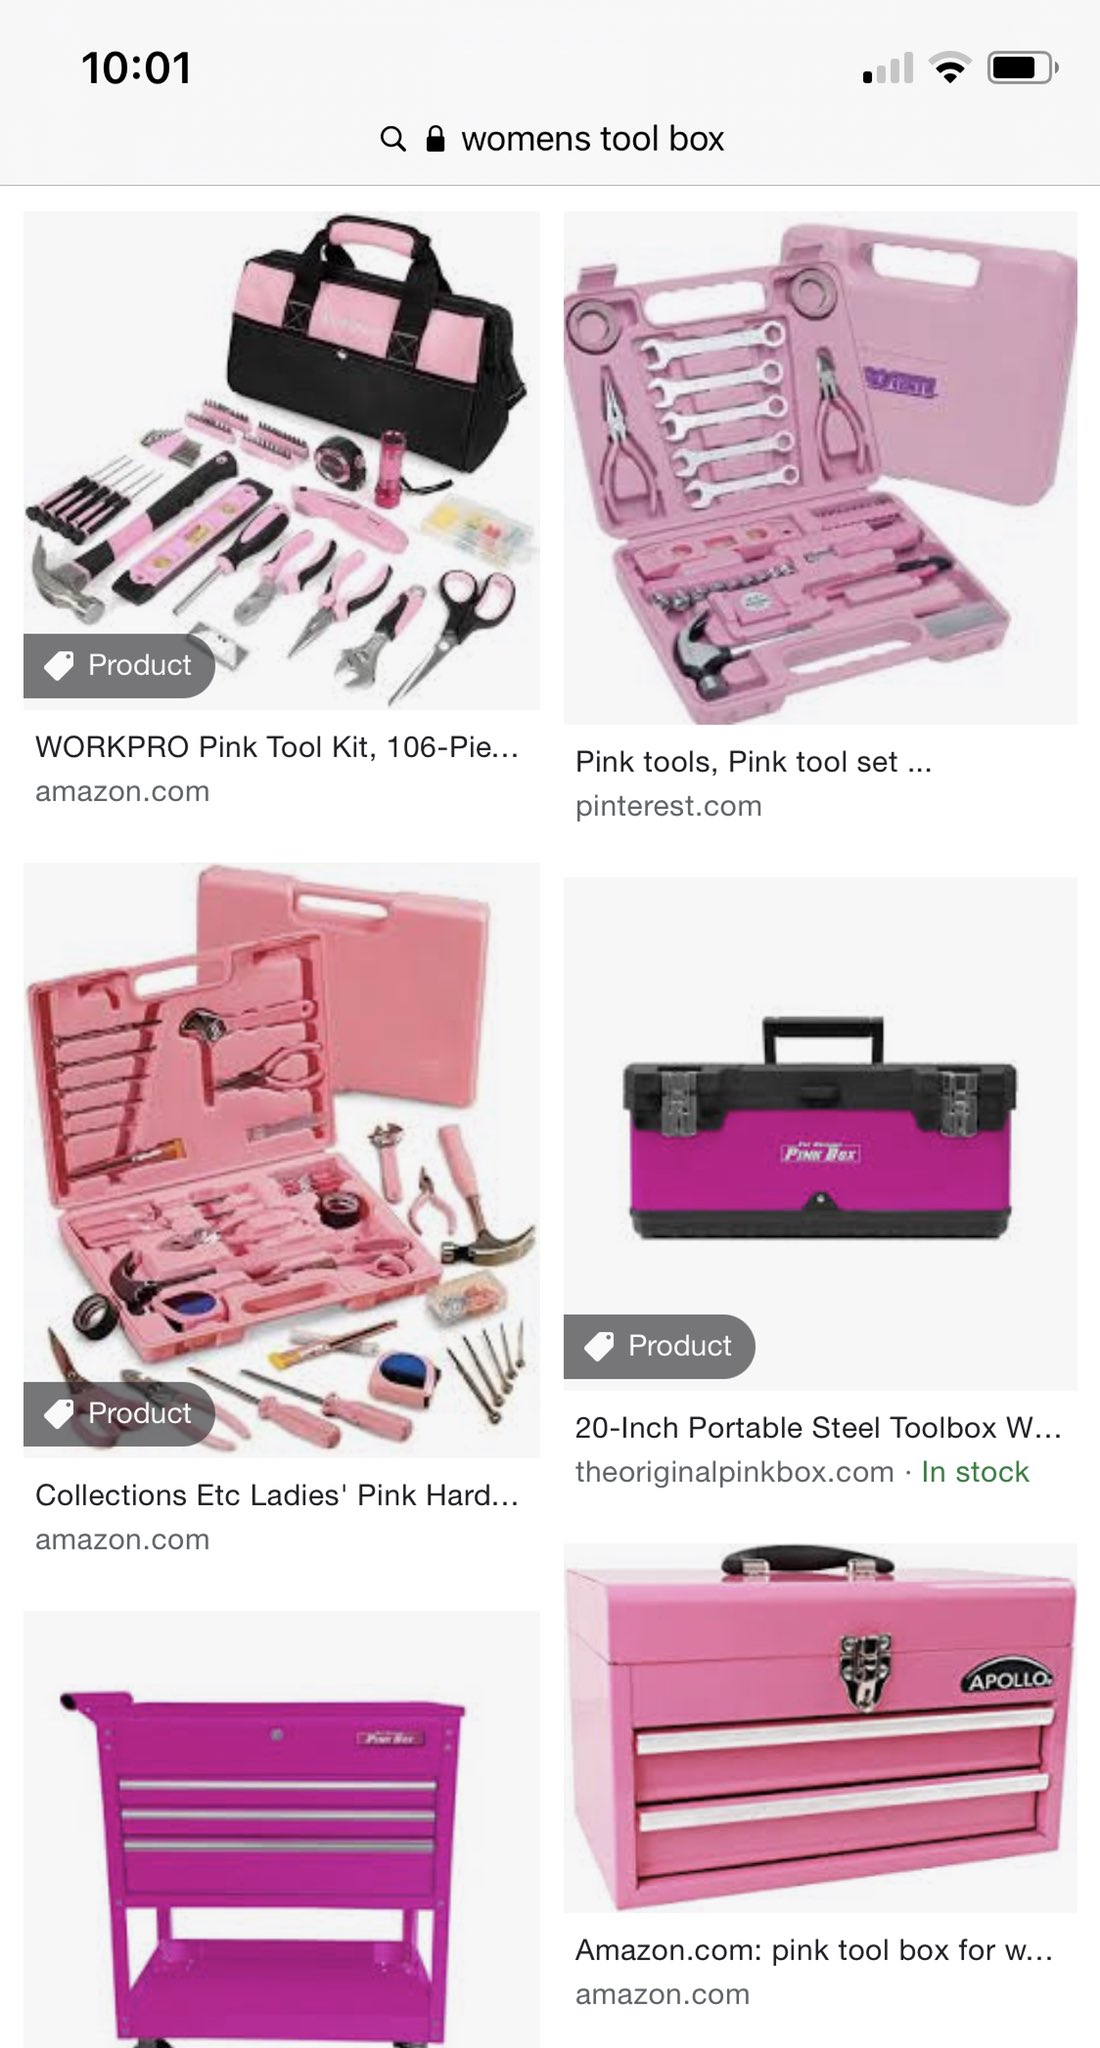 Reena Merchant on X: I Googled “womens tool box” and I got this